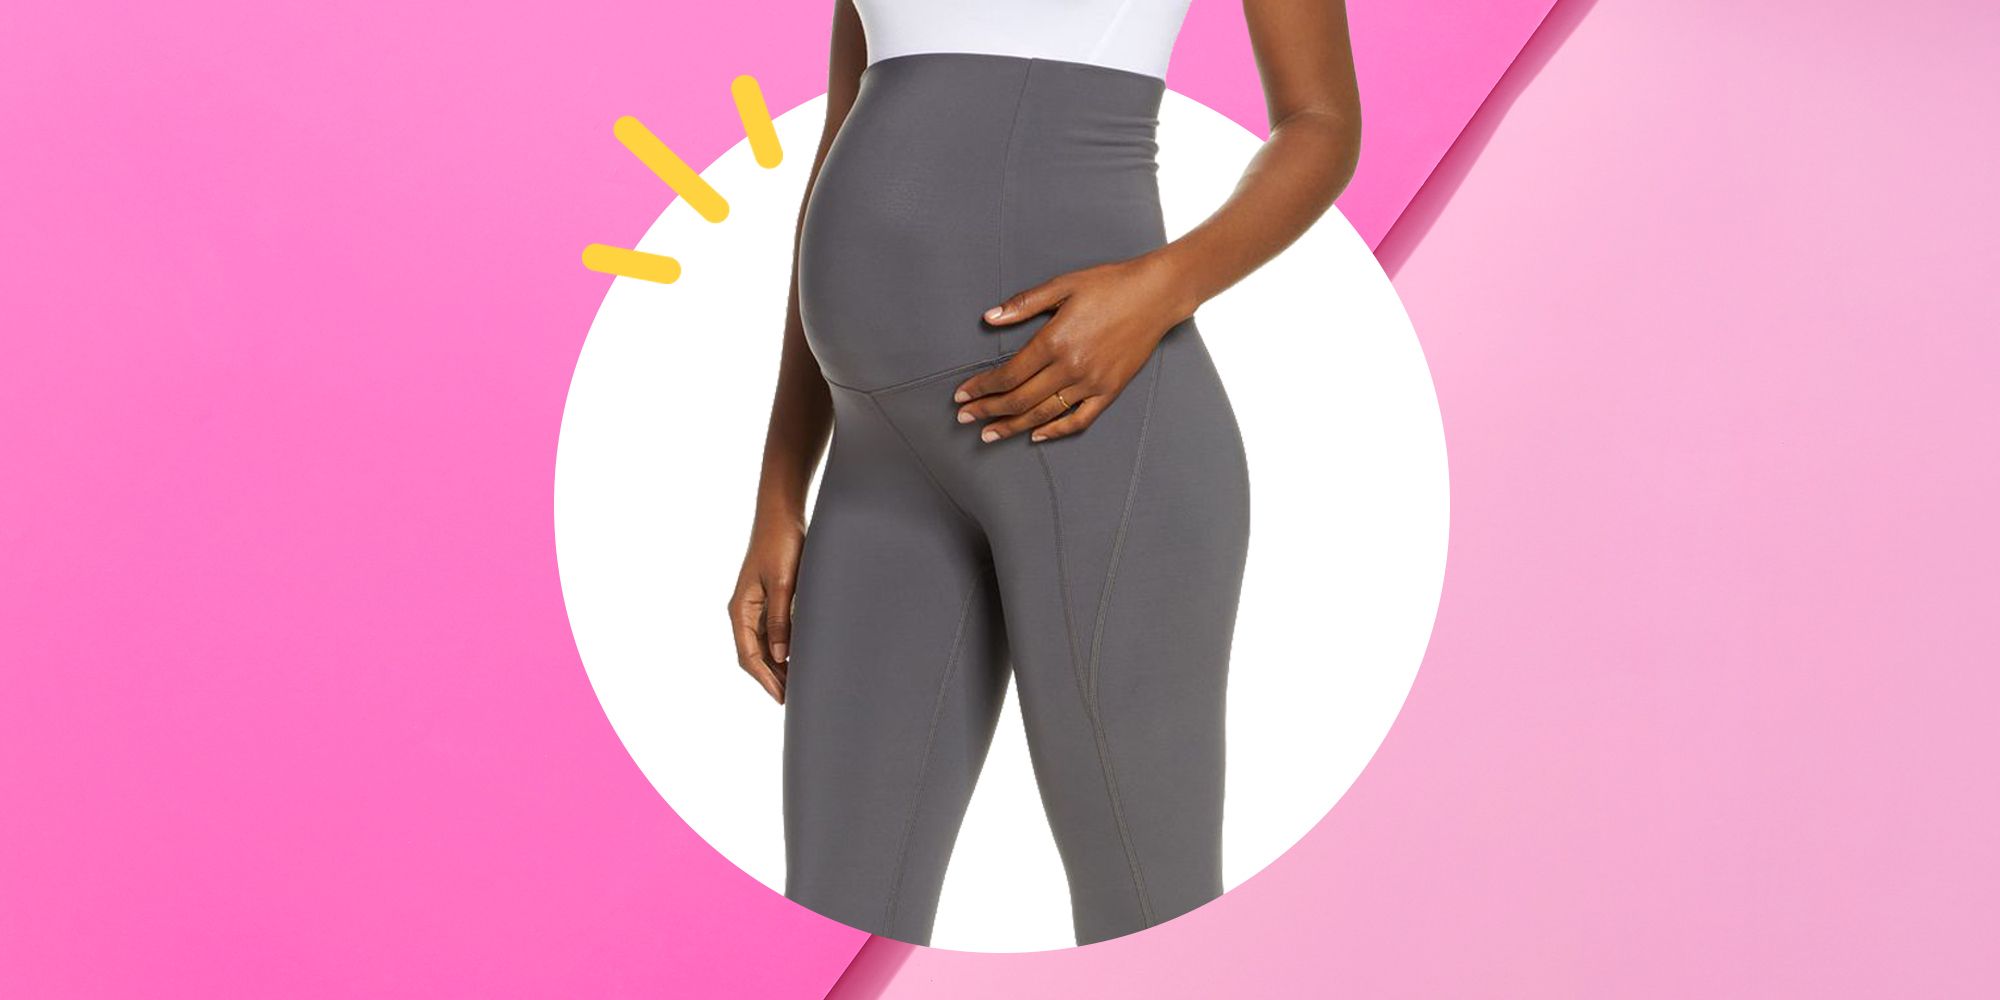 Bhome Maternity Yoga Pants Workout Leggings Sportswear Full Panel Stretchy Pregnancy Trousers Black L 